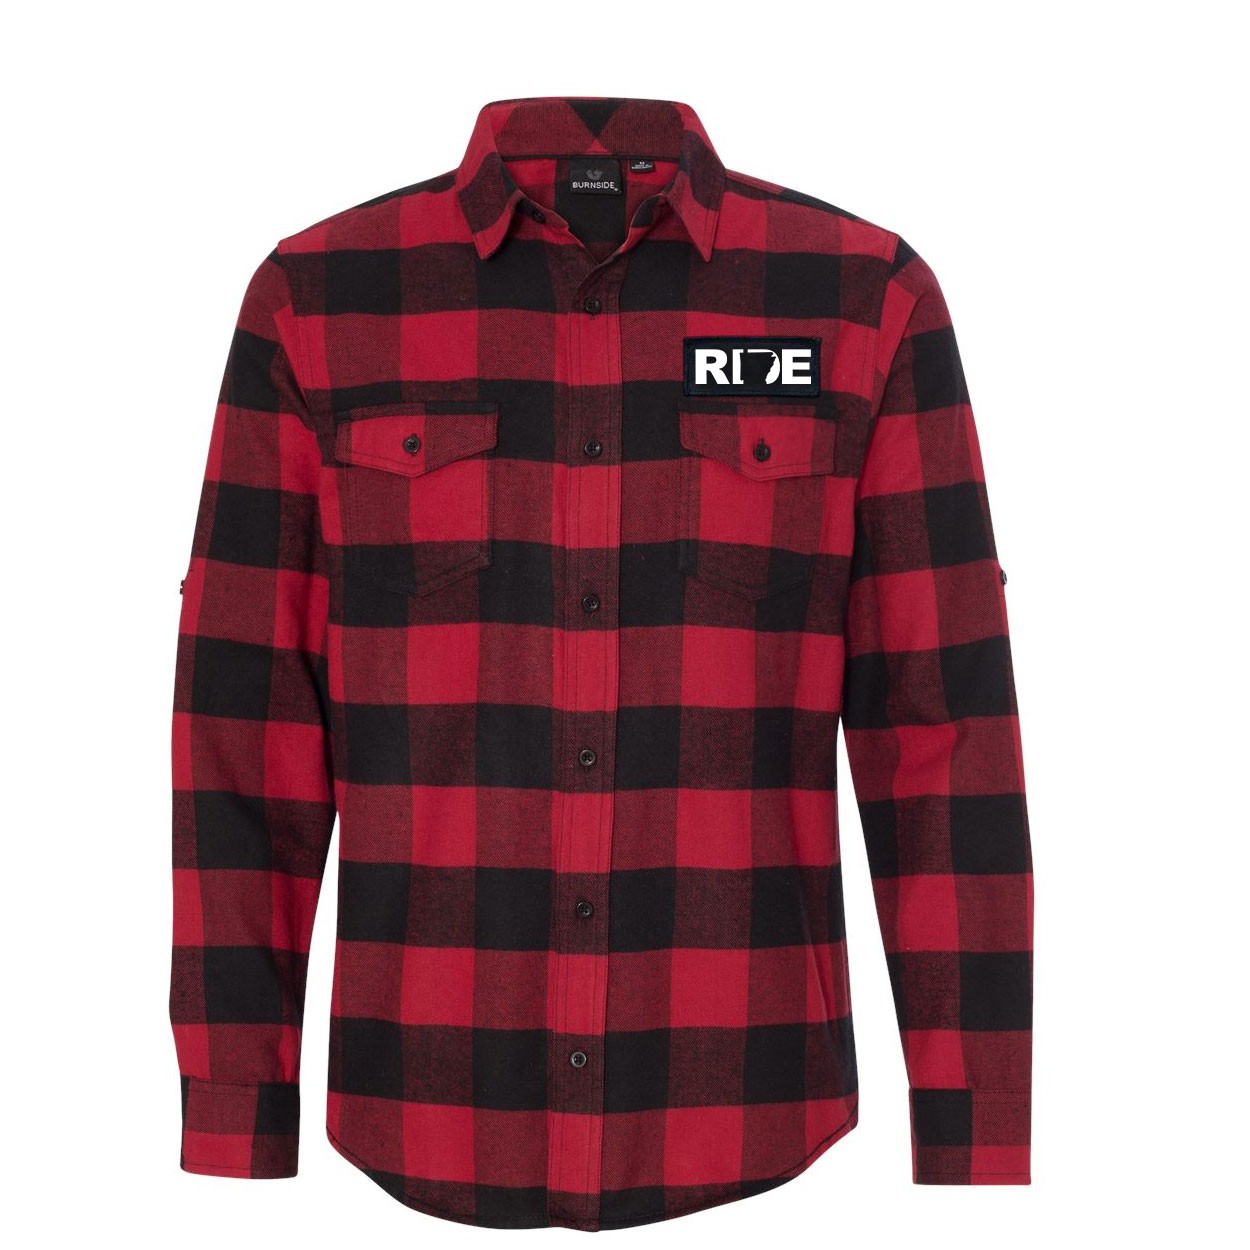 Ride Arkansas Classic Unisex Long Sleeve Woven Patch Flannel Shirt Red/Black Buffalo (White Logo)